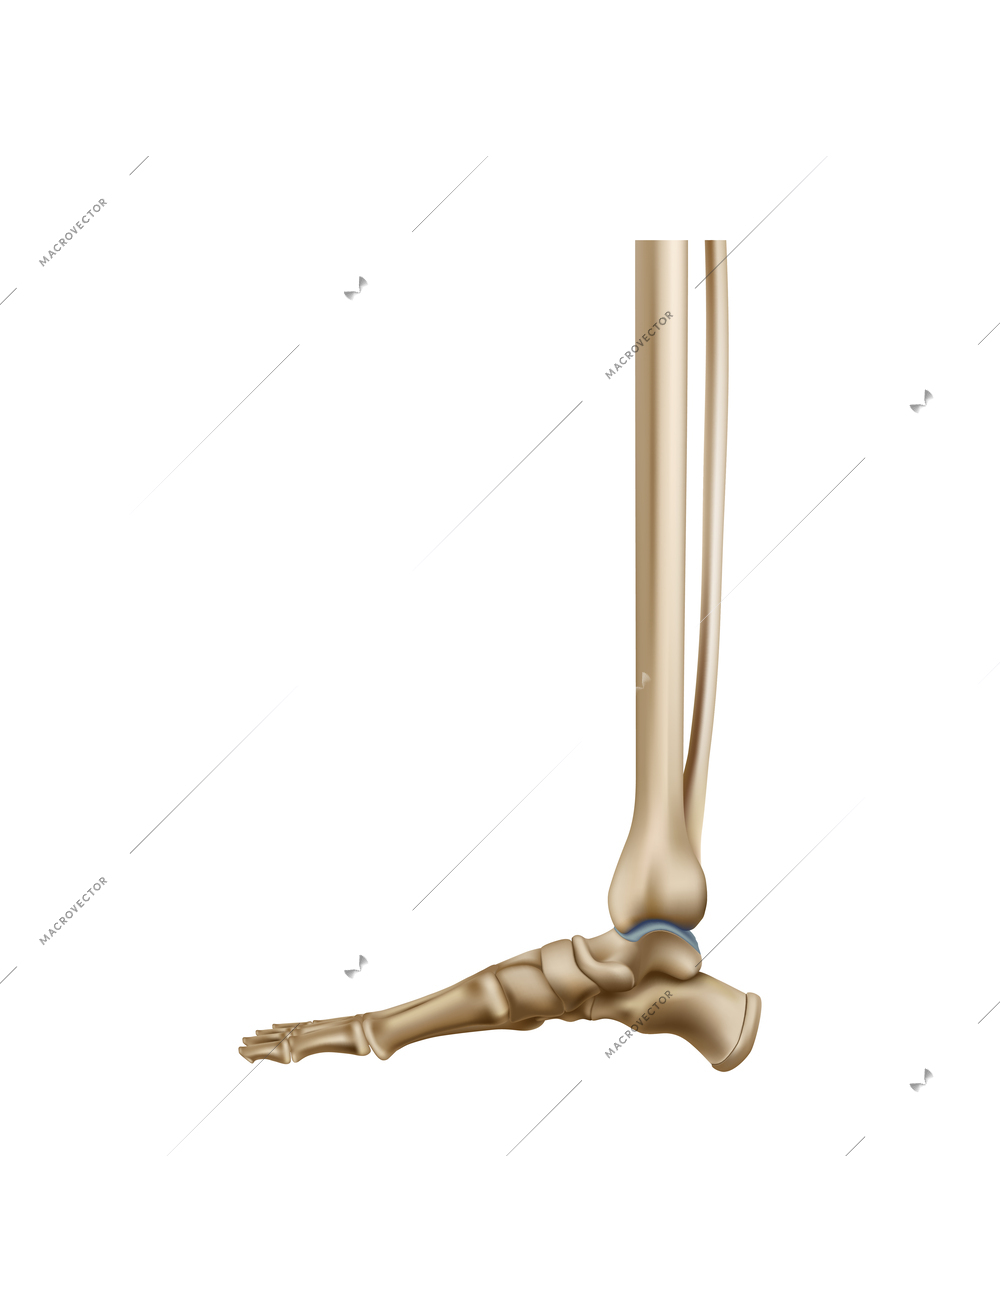 Realistic human foot bones anatomy side view vector illustration